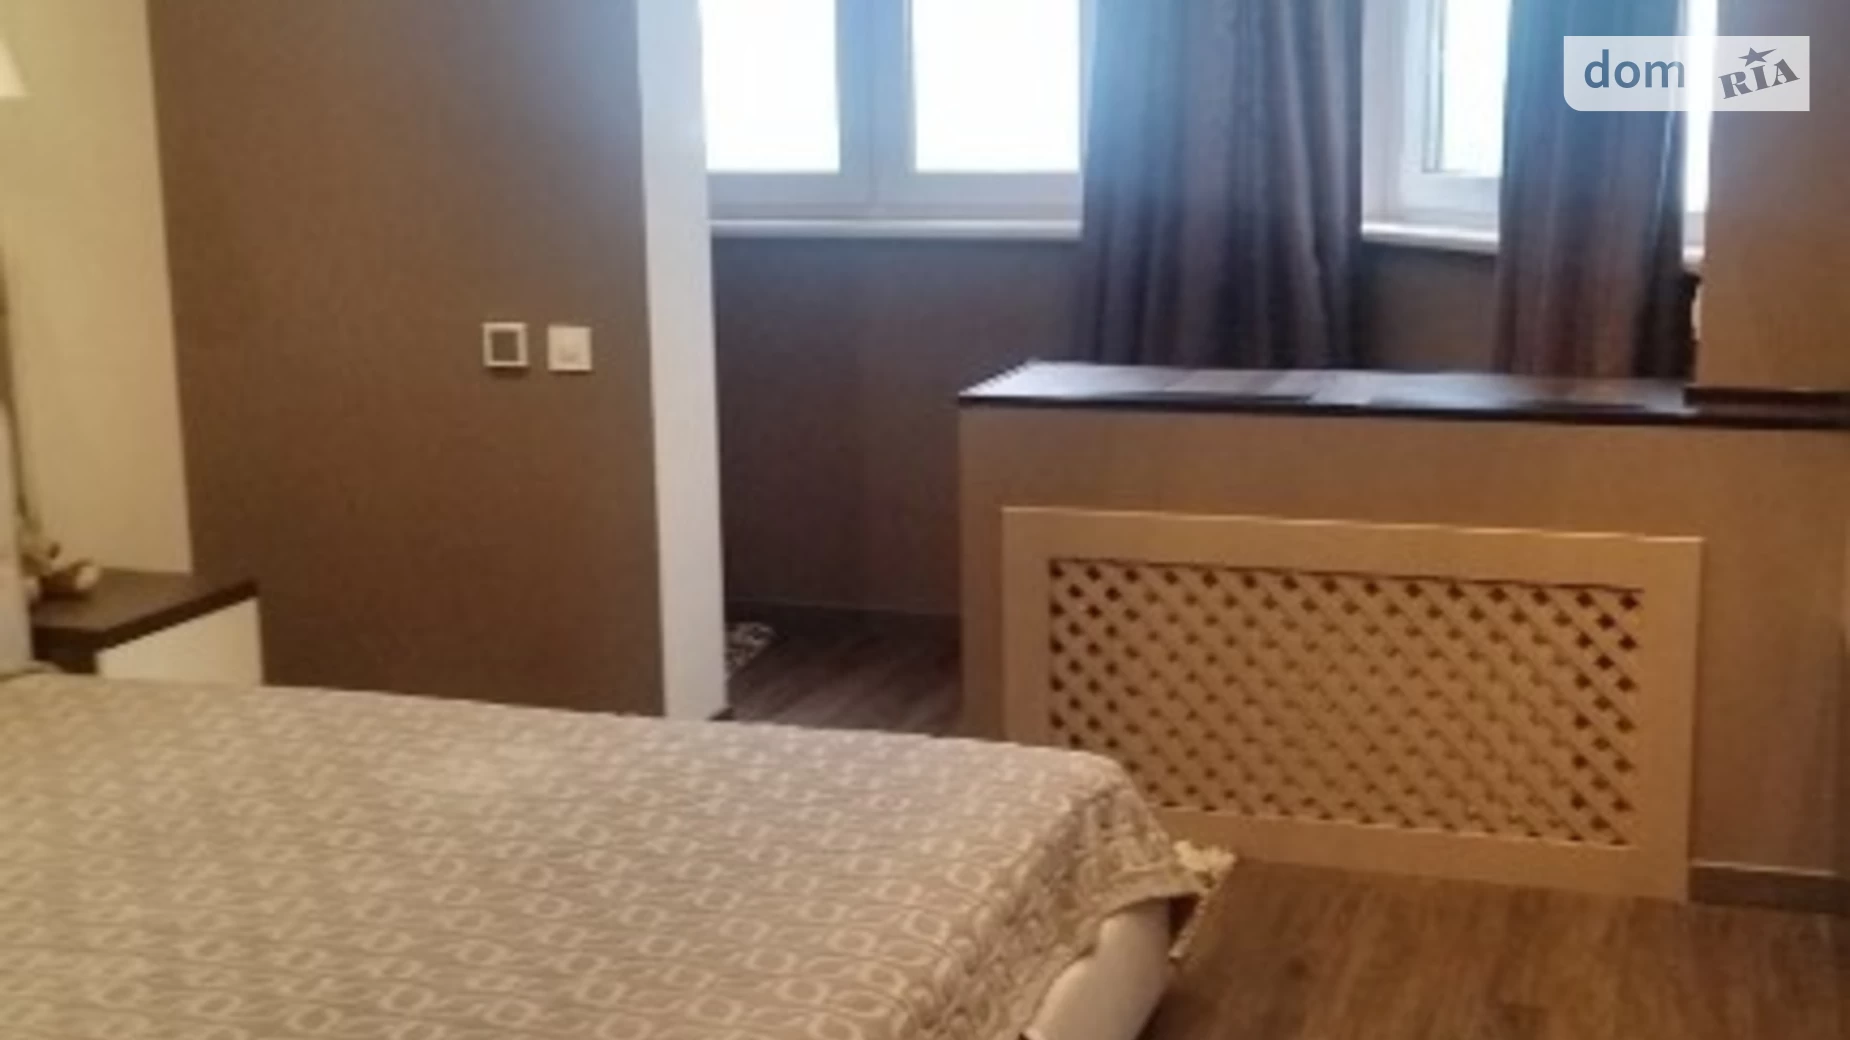 2-комнатная квартира 81.75 кв. м в Запорожье